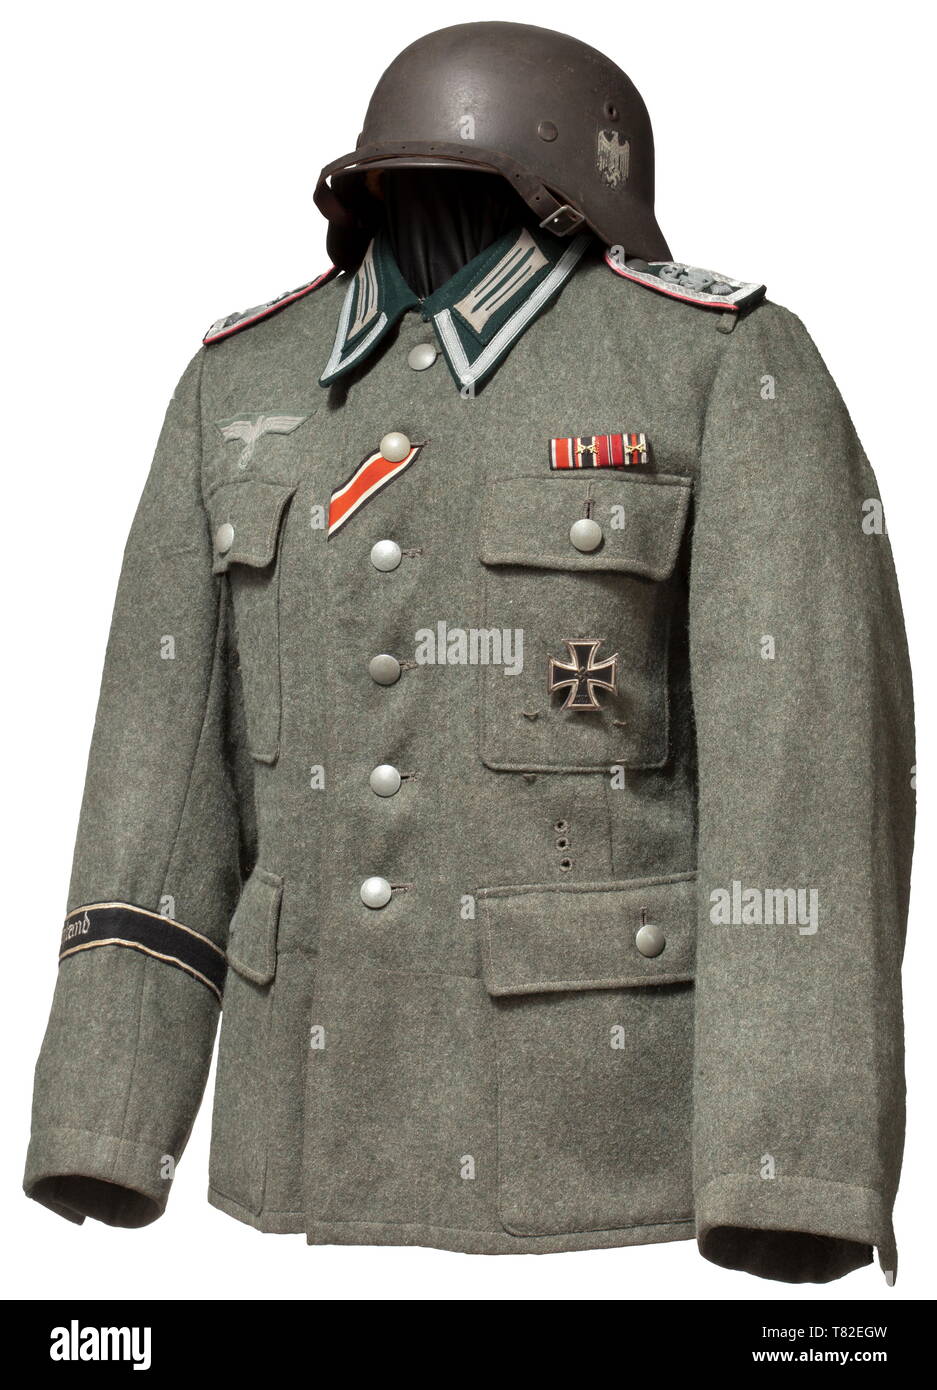 Un campo túnica M 43 para un Feldwebel en Panzer Regimiento "Großdeutschland"  hecho de campo de paño de lana gris, verde oscuro revés collar con sutura  collar de parches y suboficiales, encaje